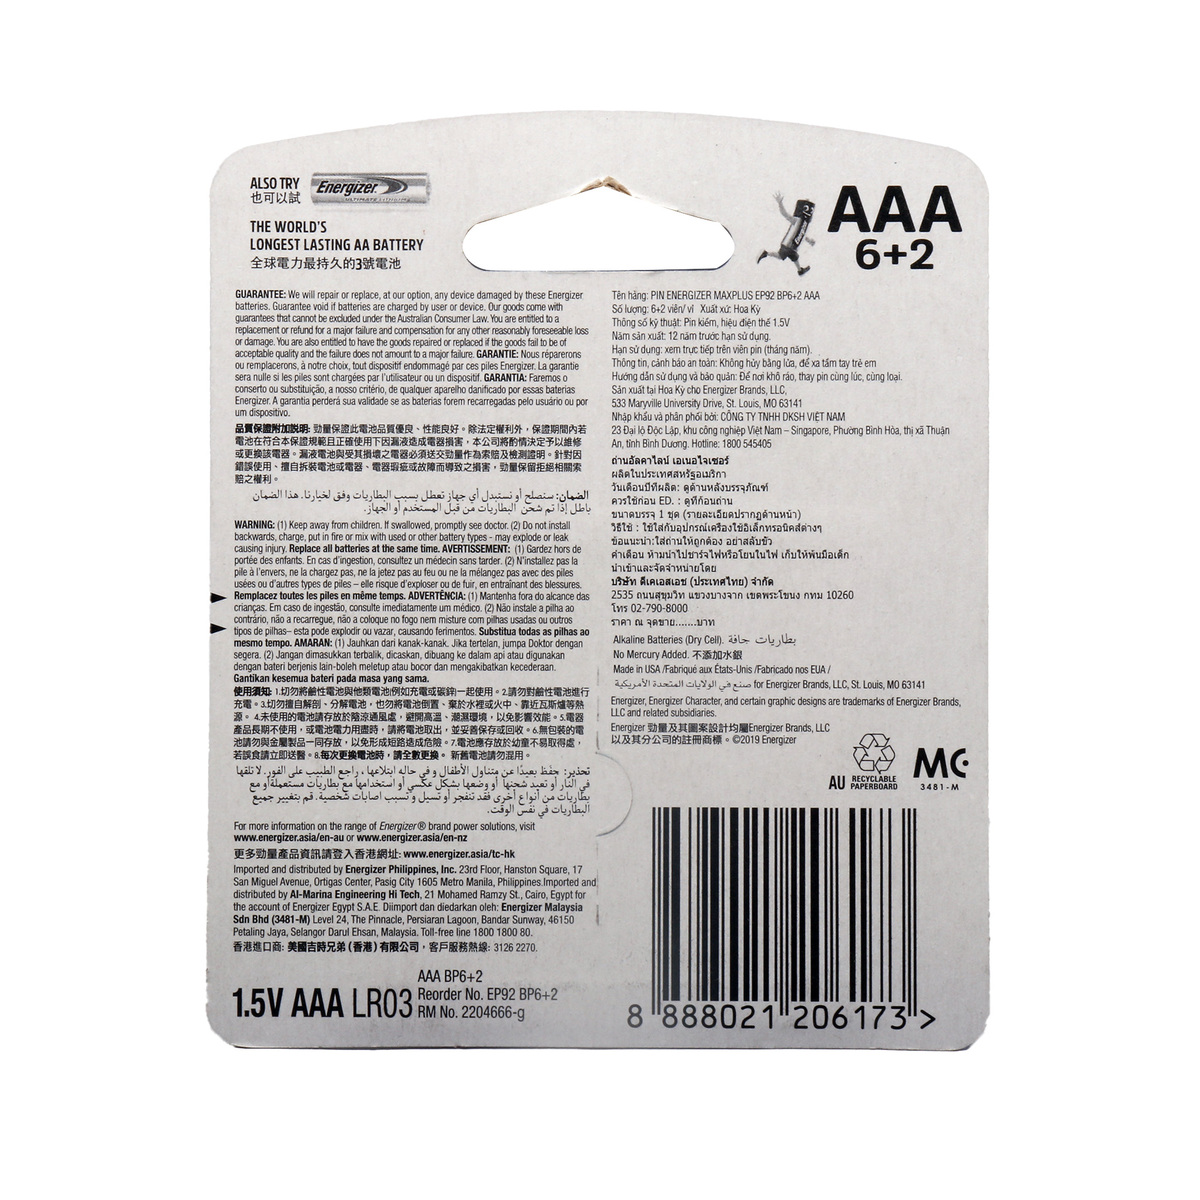 Energizer Max Plus AAA Alkaline Battery 6+2